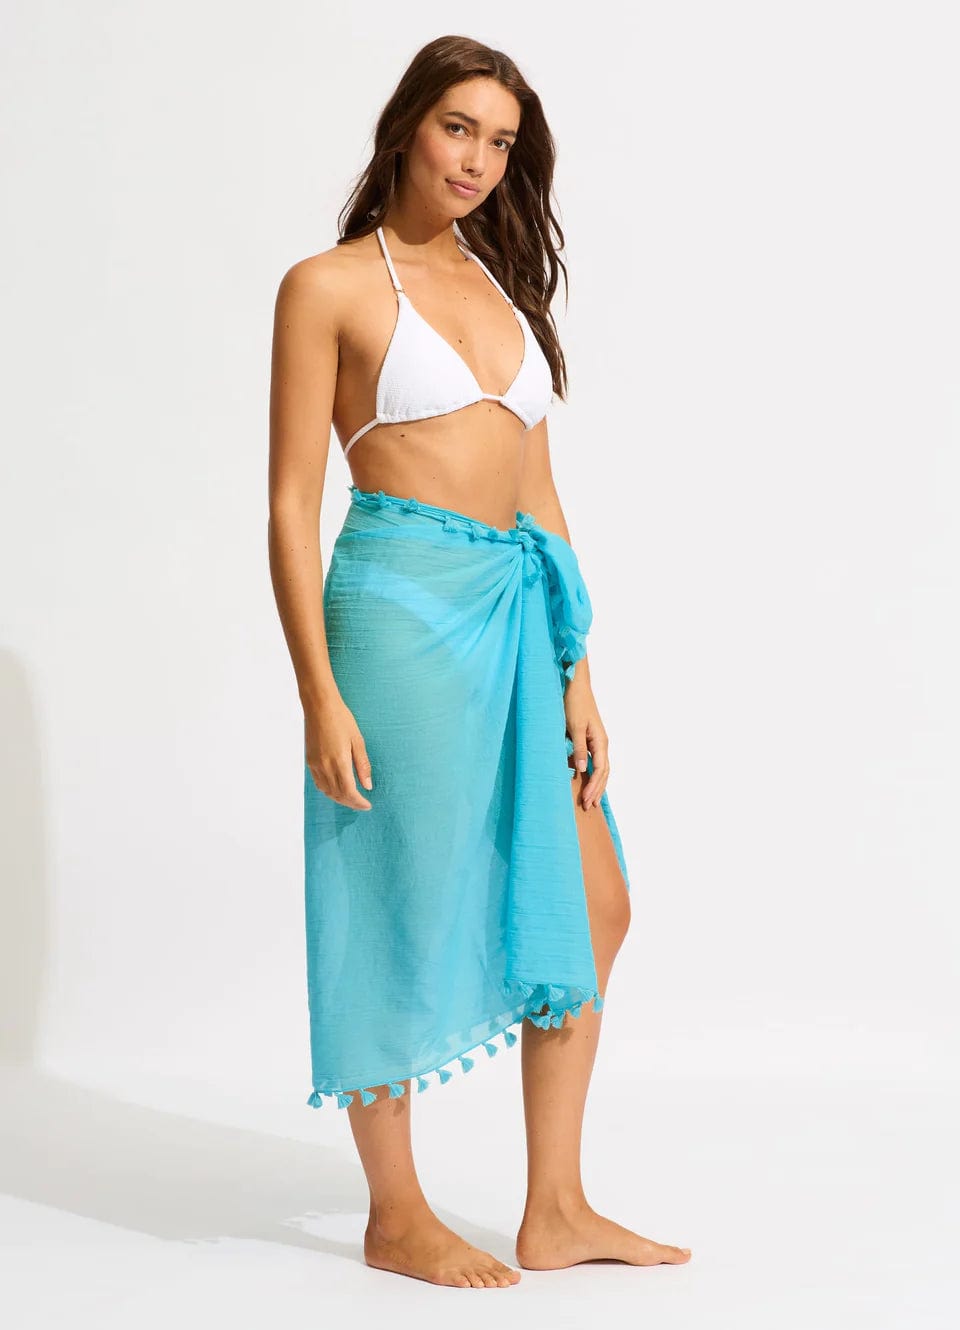 Cotton Gauze Sarong - Seafolly - Splash Swimwear  - June22, new accessories, Sarongs, Seafolly, women clothing - Splash Swimwear 